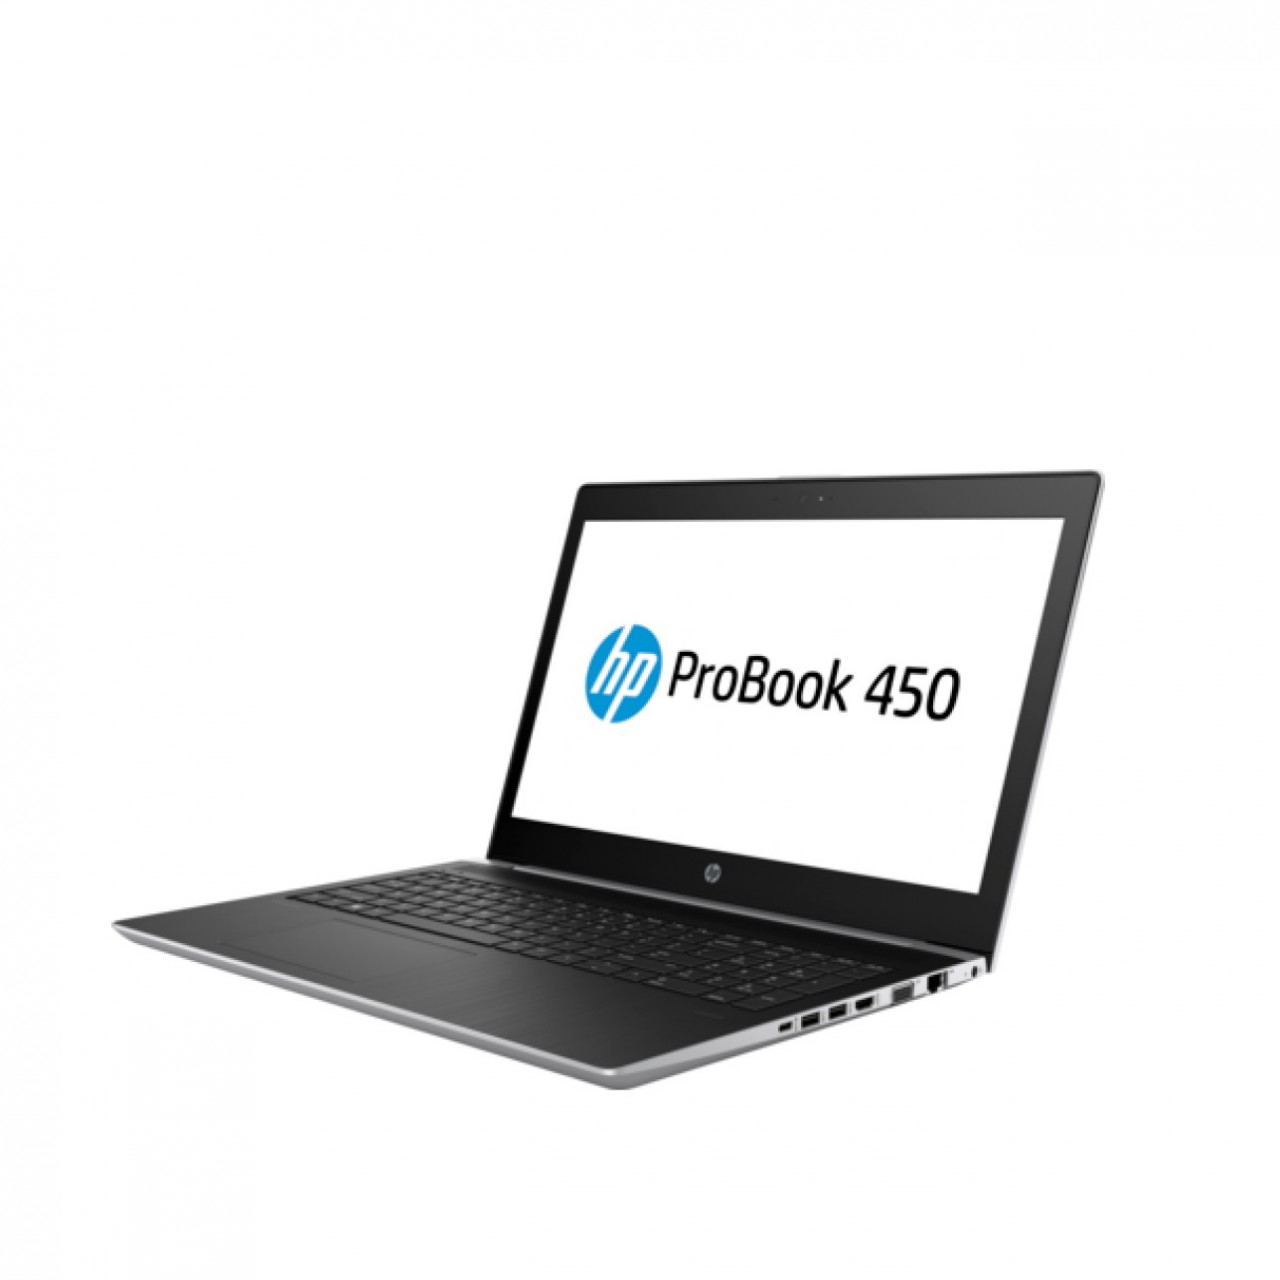 Hp Probook 450 G5 Laptop 156 Inch 4 Gb 1 Tb Core I5 8th Generation 2 Gb Nvidia 9351